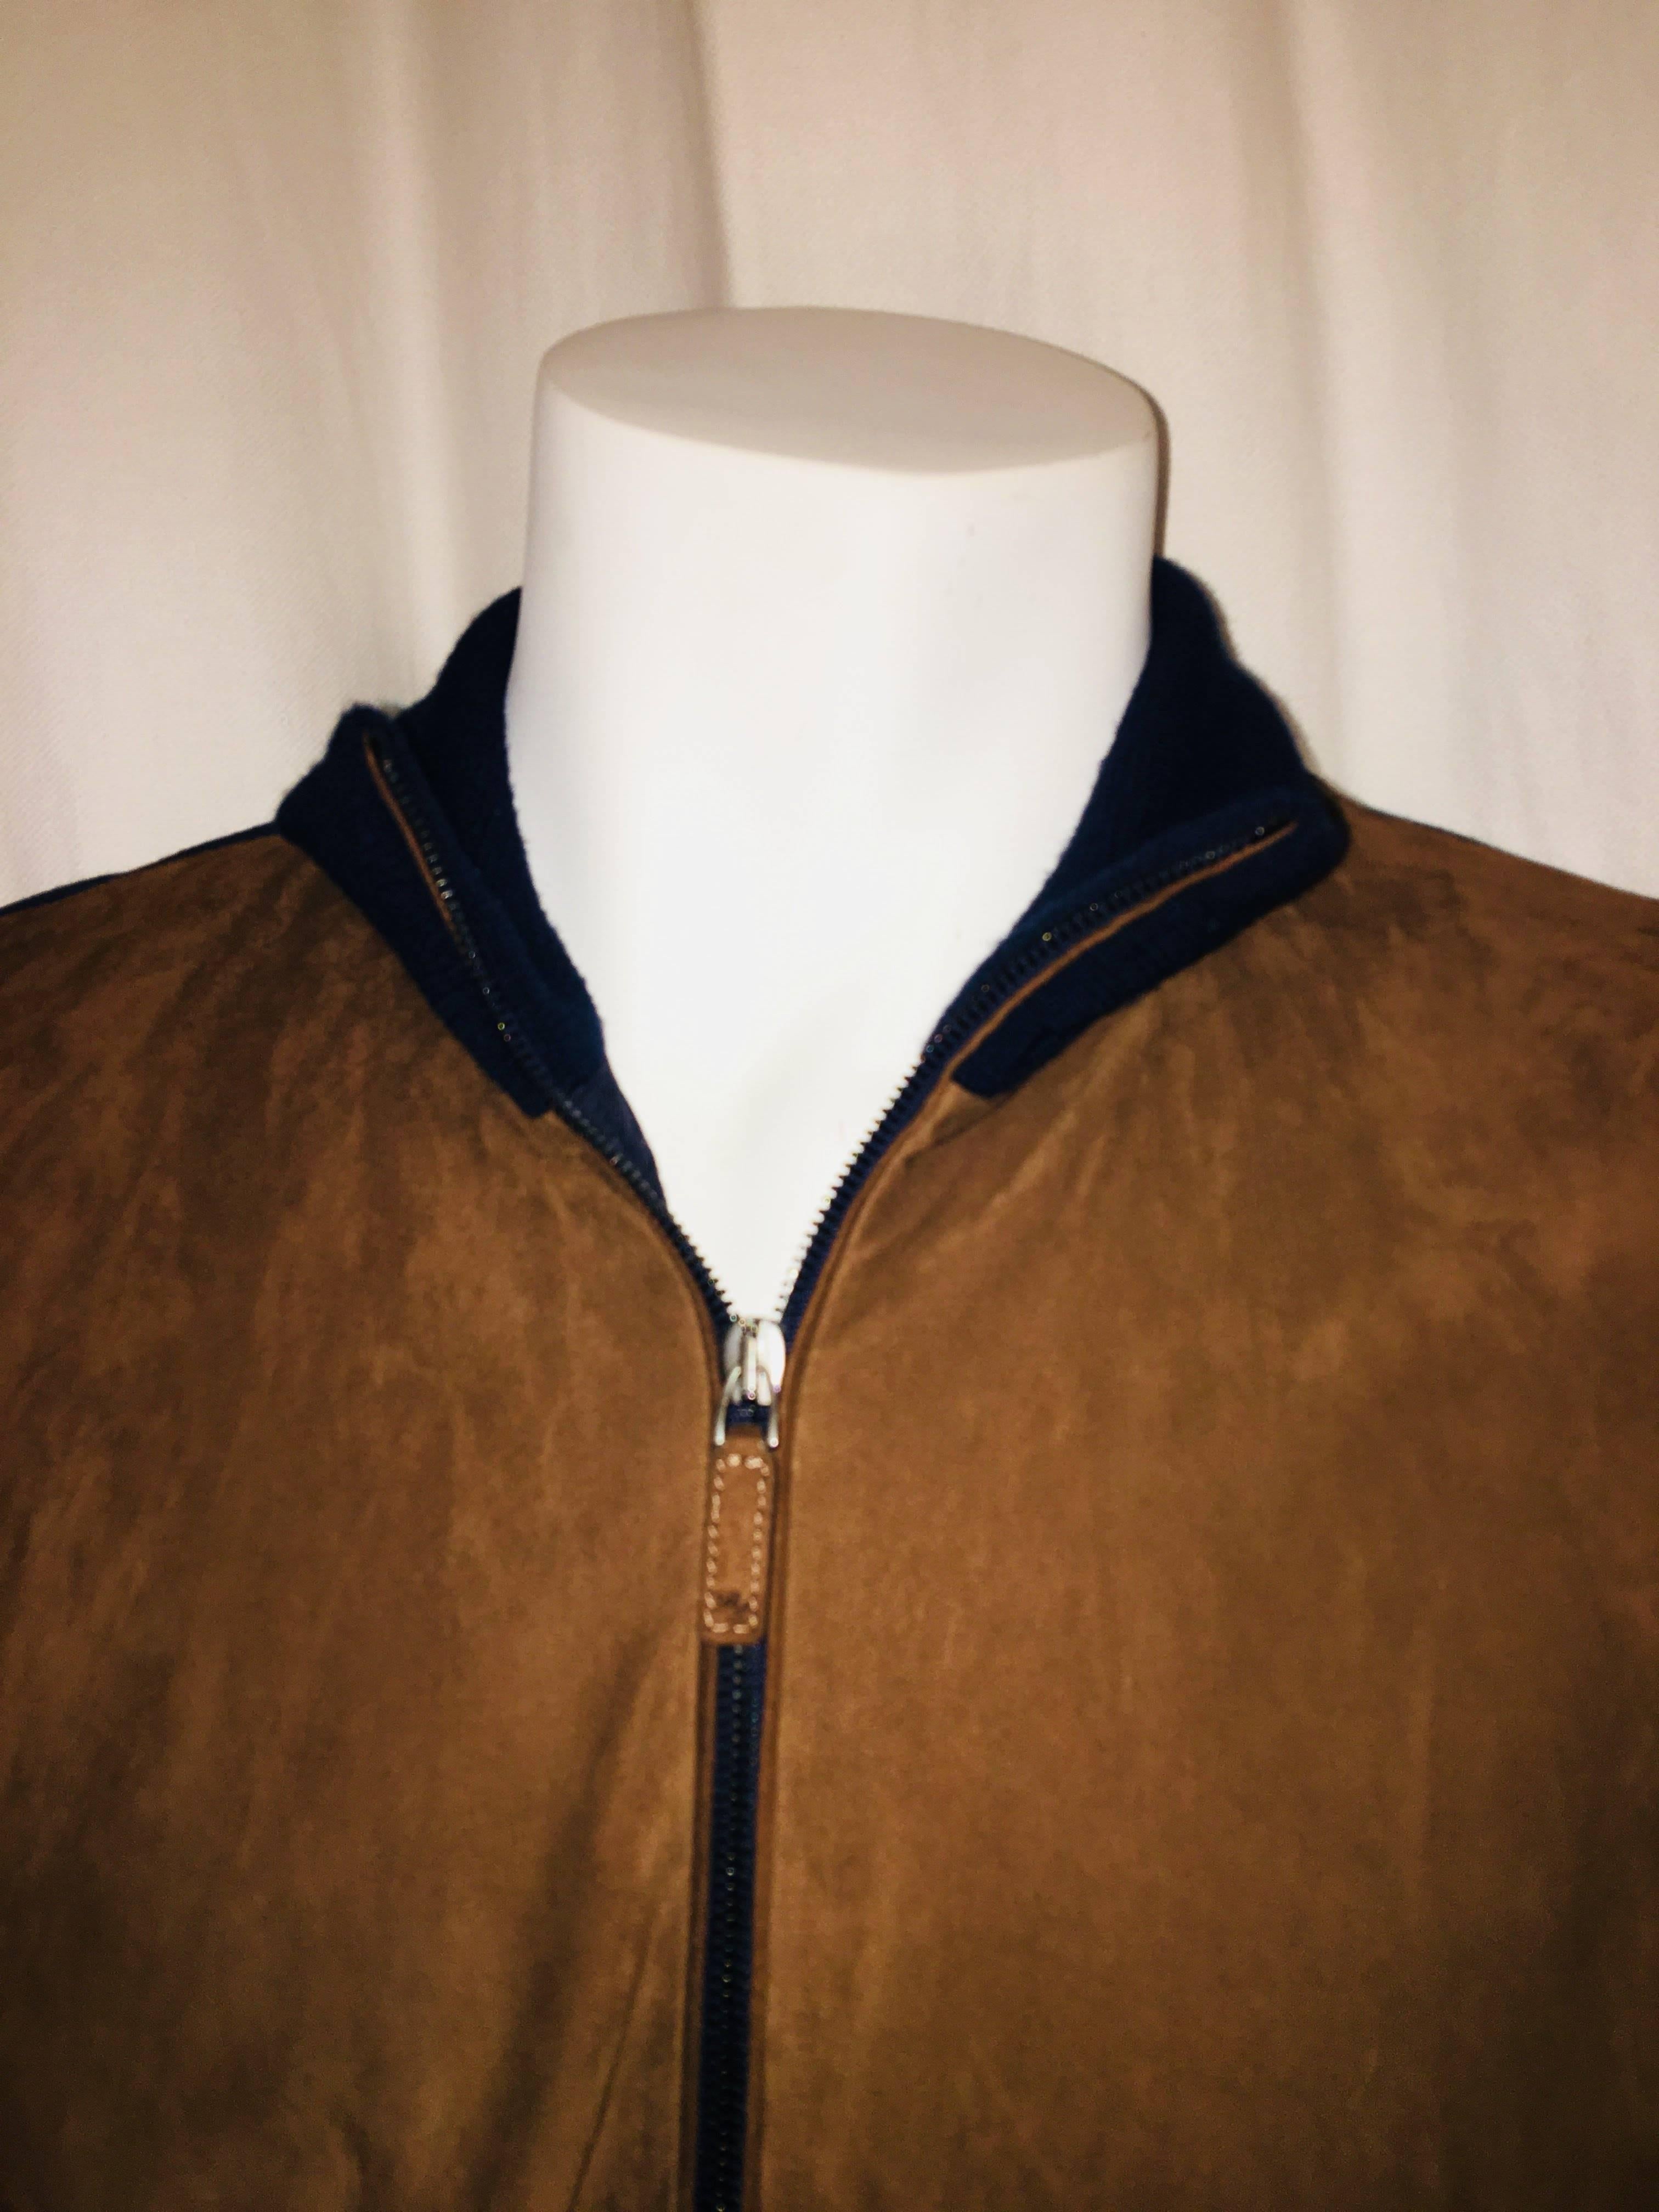 Ralph Lauren Brown Leather Panel Jacket, Zip up with Navy Color Block Sleeves and Zip Pockets.